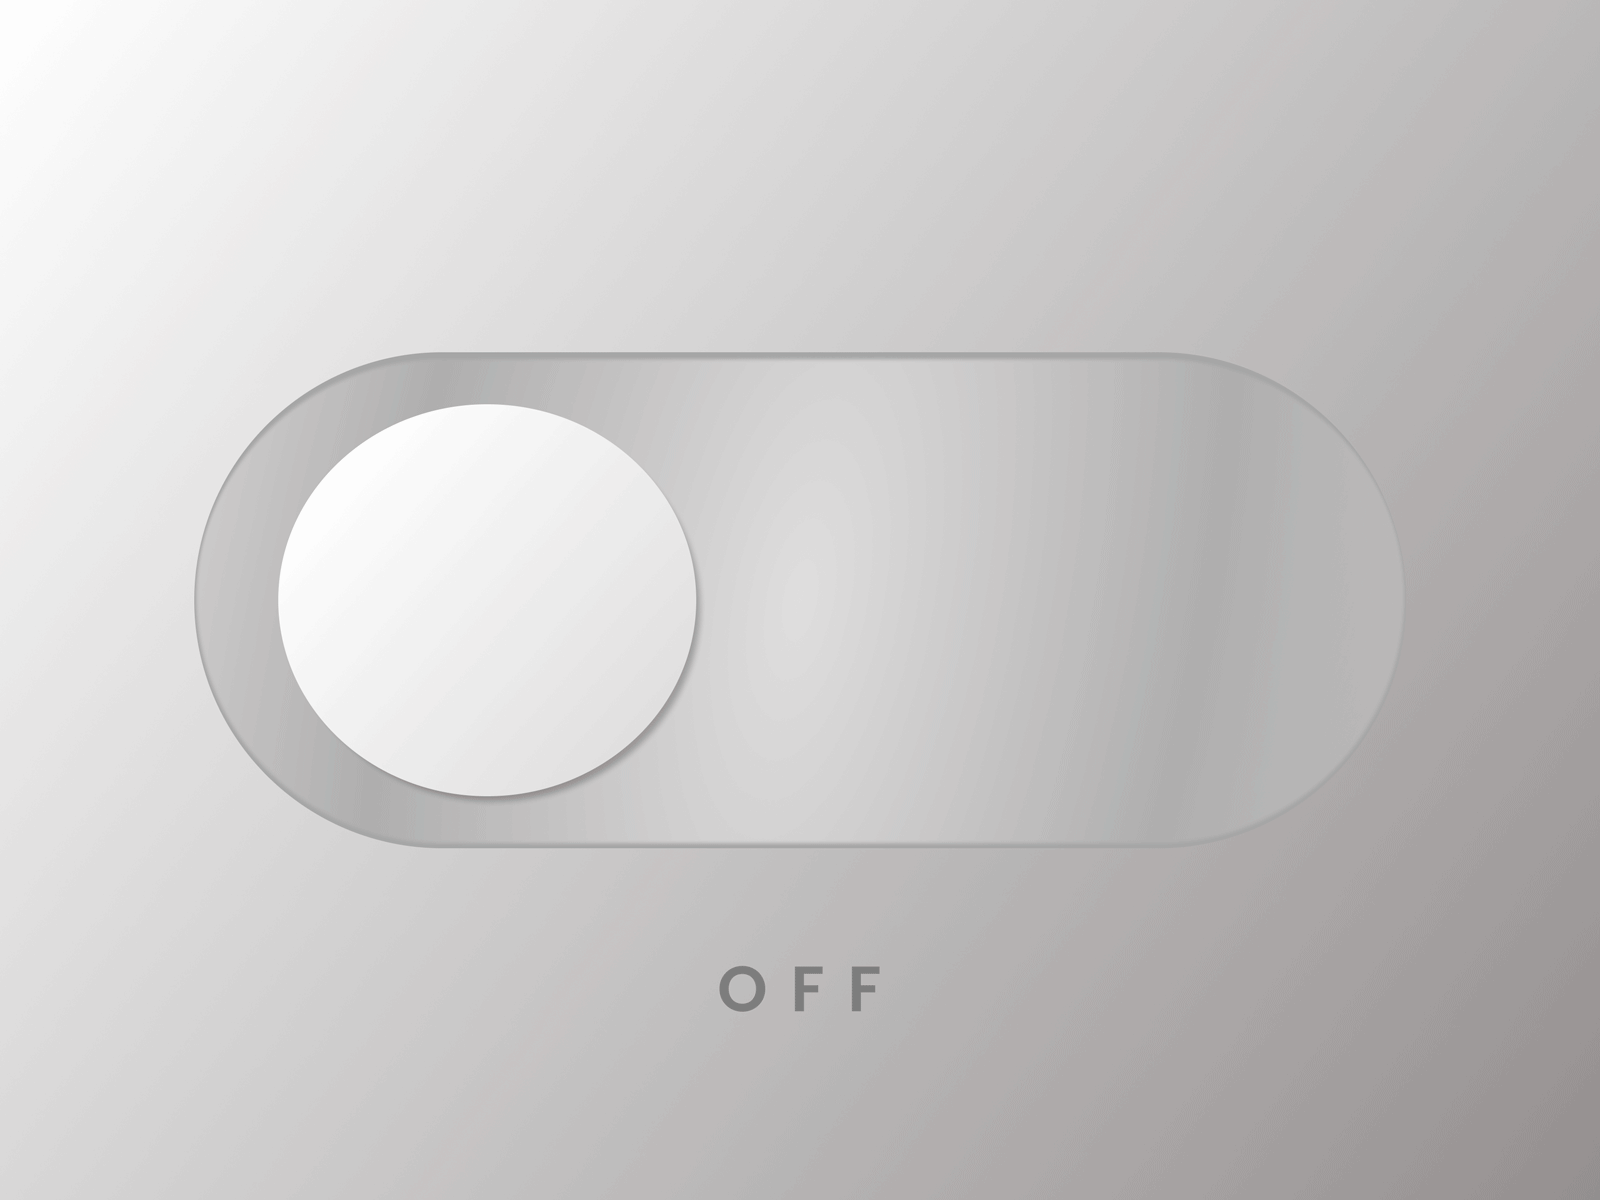 #DailyUI - On/Off Switch Design